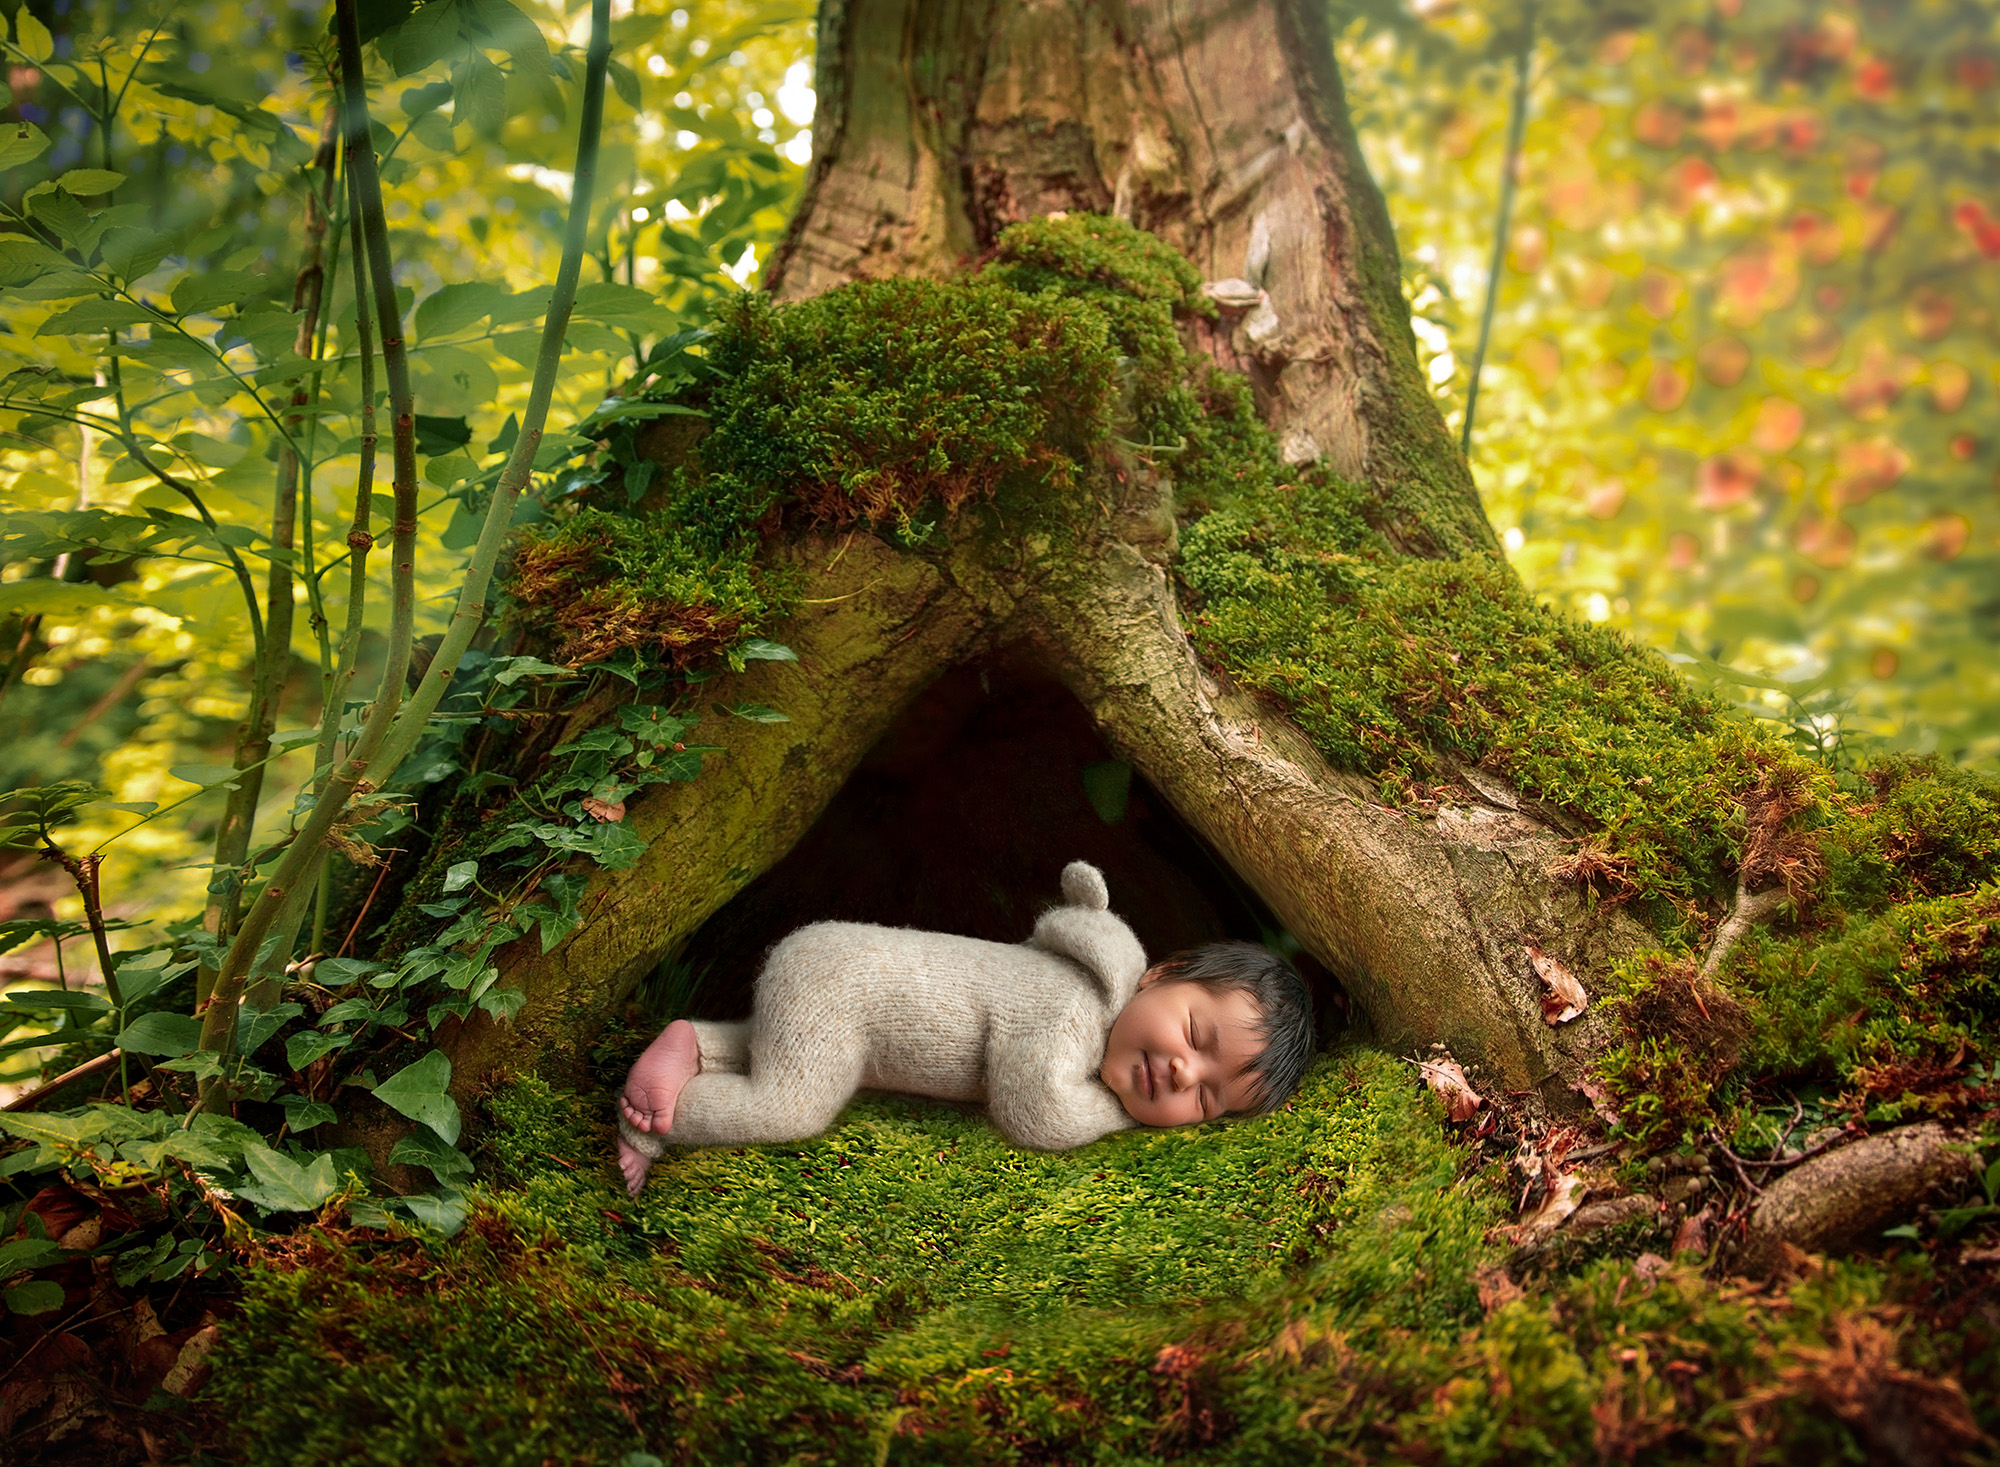 outdoorsy newborn photos newborn baby girl asleep inside of mossy hole in tree